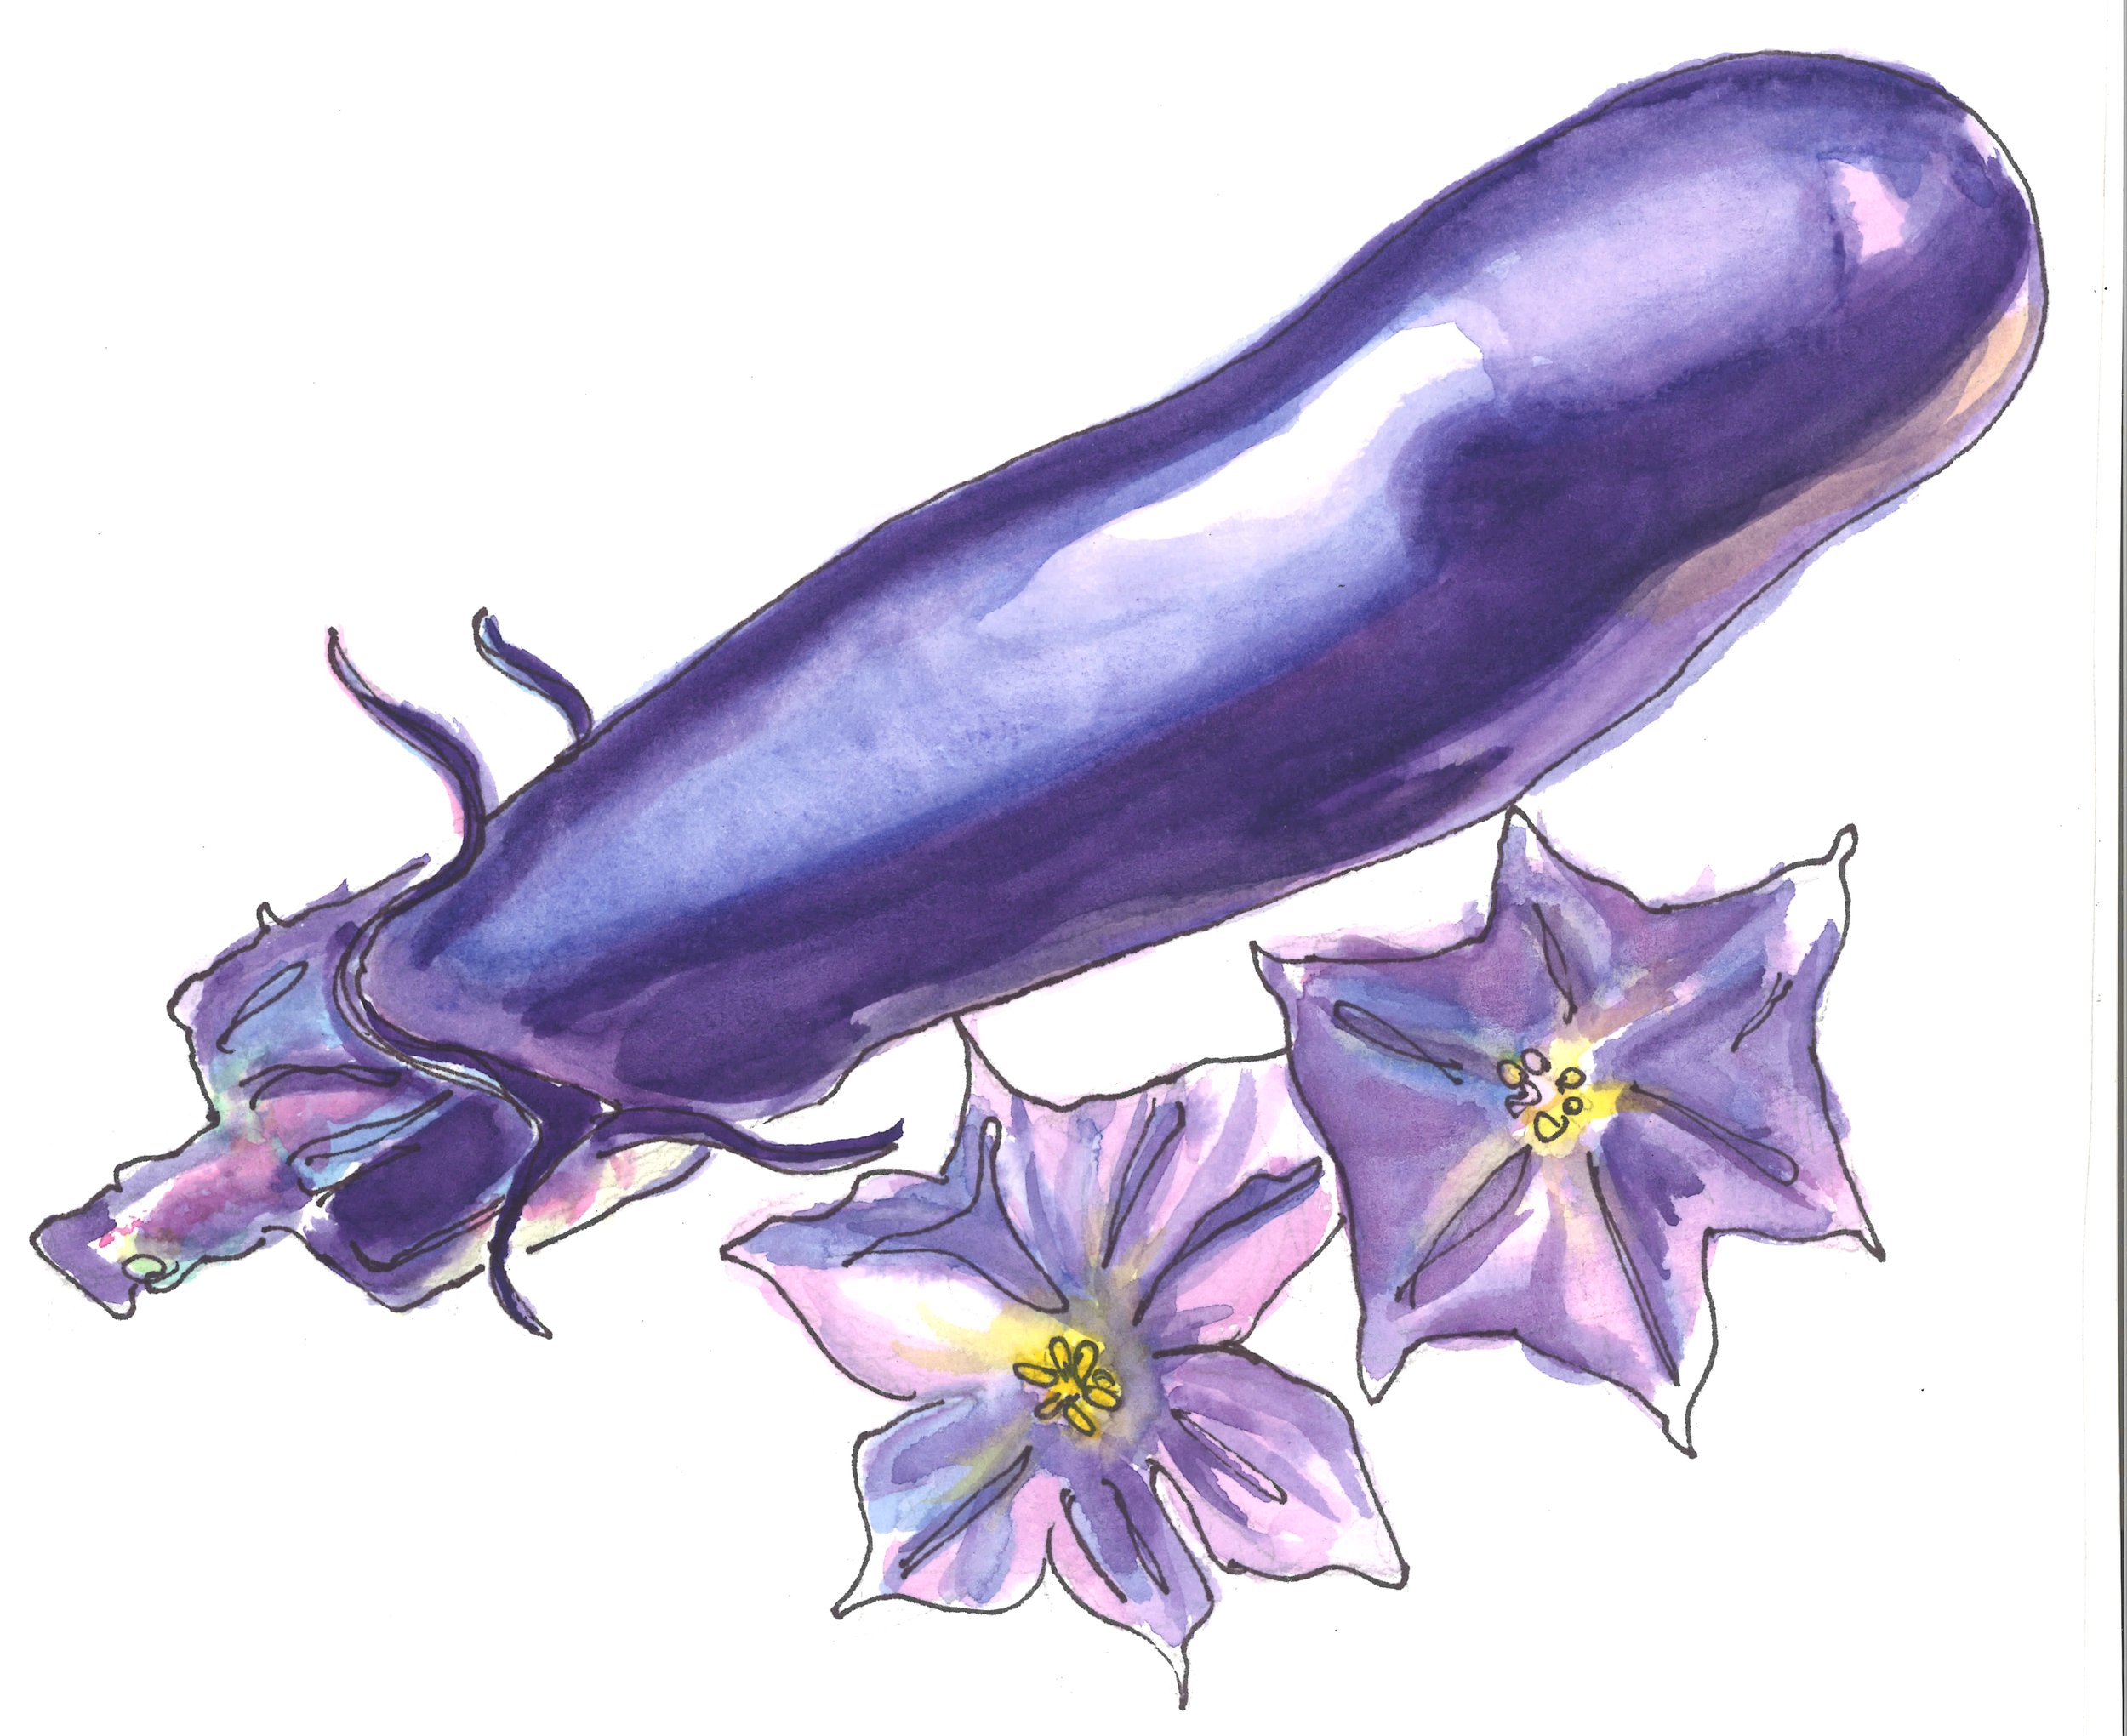  “Summer Eggplant” by Drew Vallero, Stanford '22 